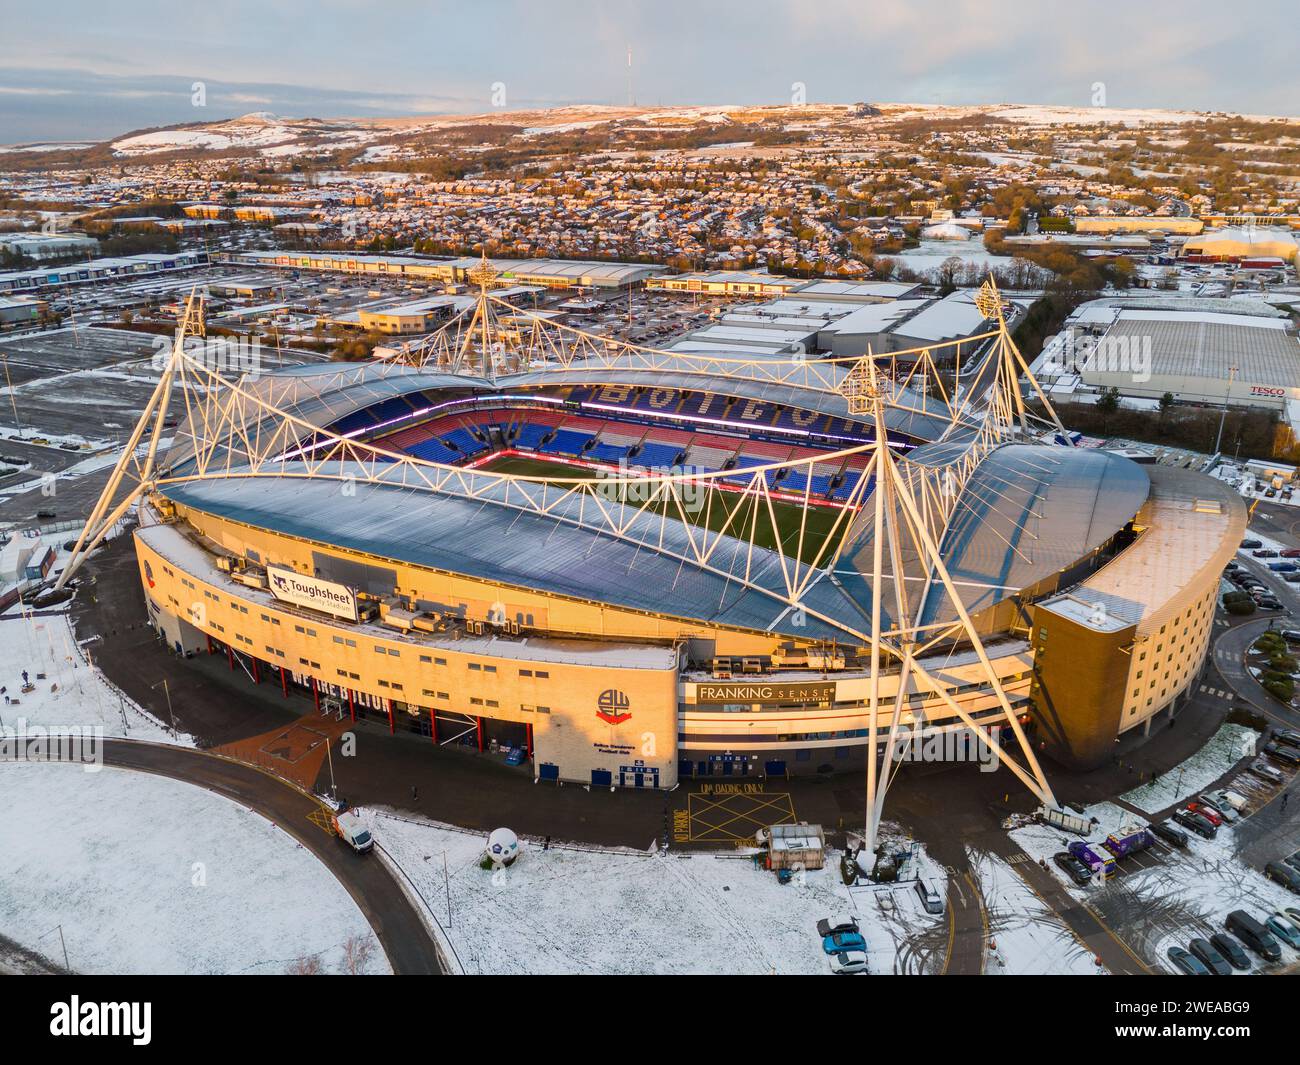 Bolton Wanderers Football Club, Tough Sheet Community Stadium Luftbild nach Schneefall. Januar 2024 Stockfoto